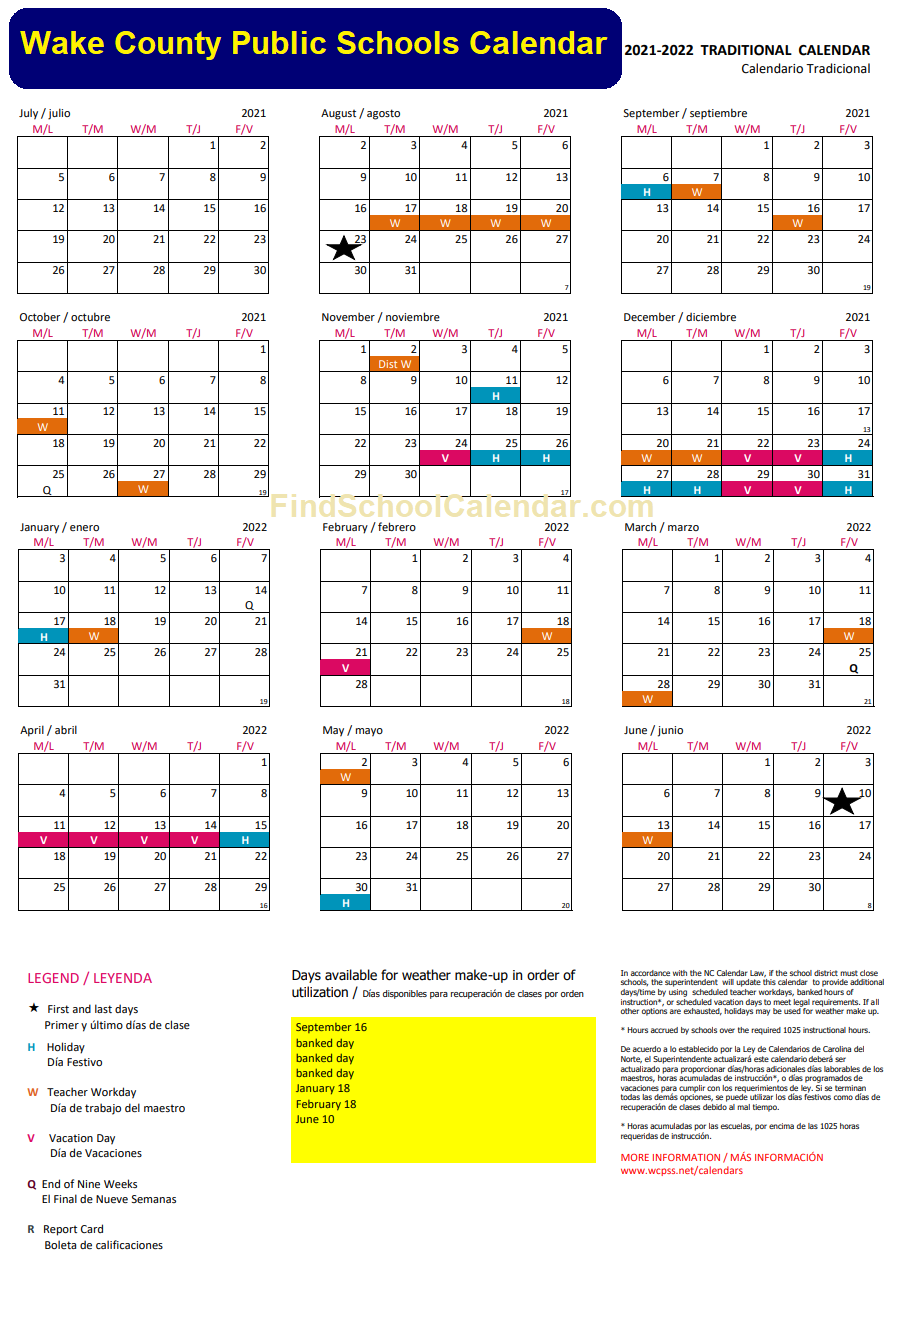 Wake County Public Schools Calendar 2021-2022